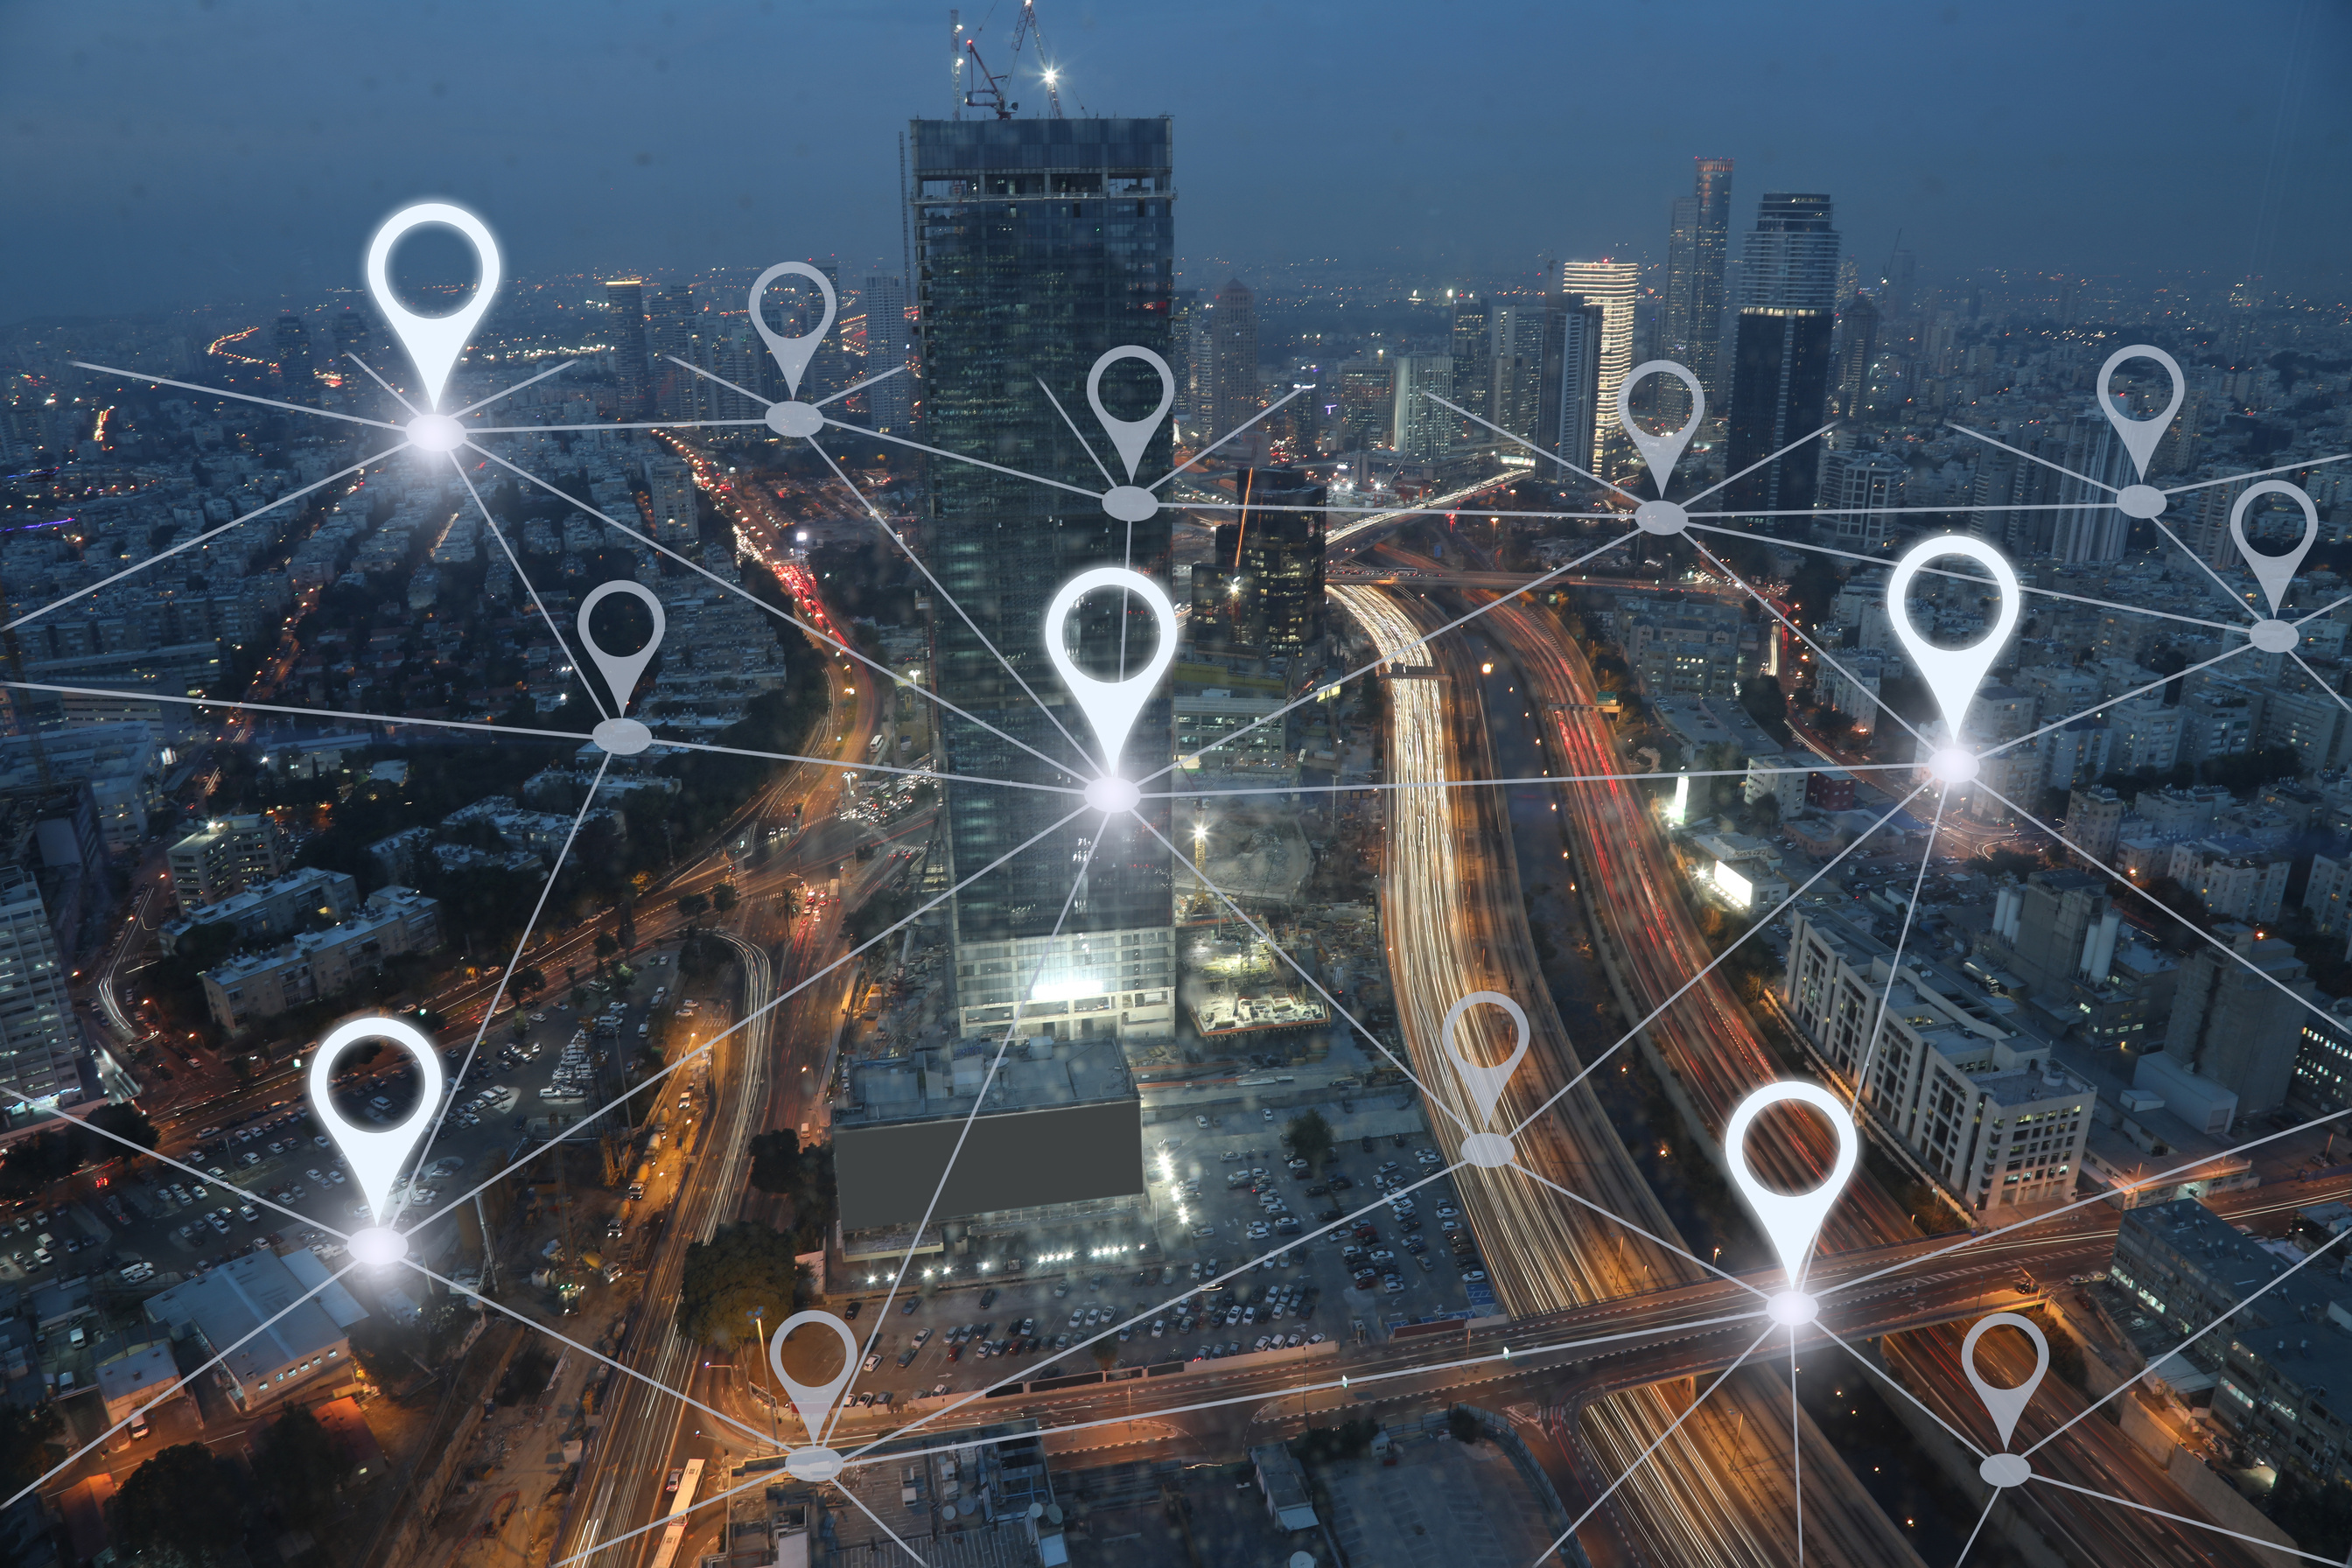 Network gps navigation modern city future technology